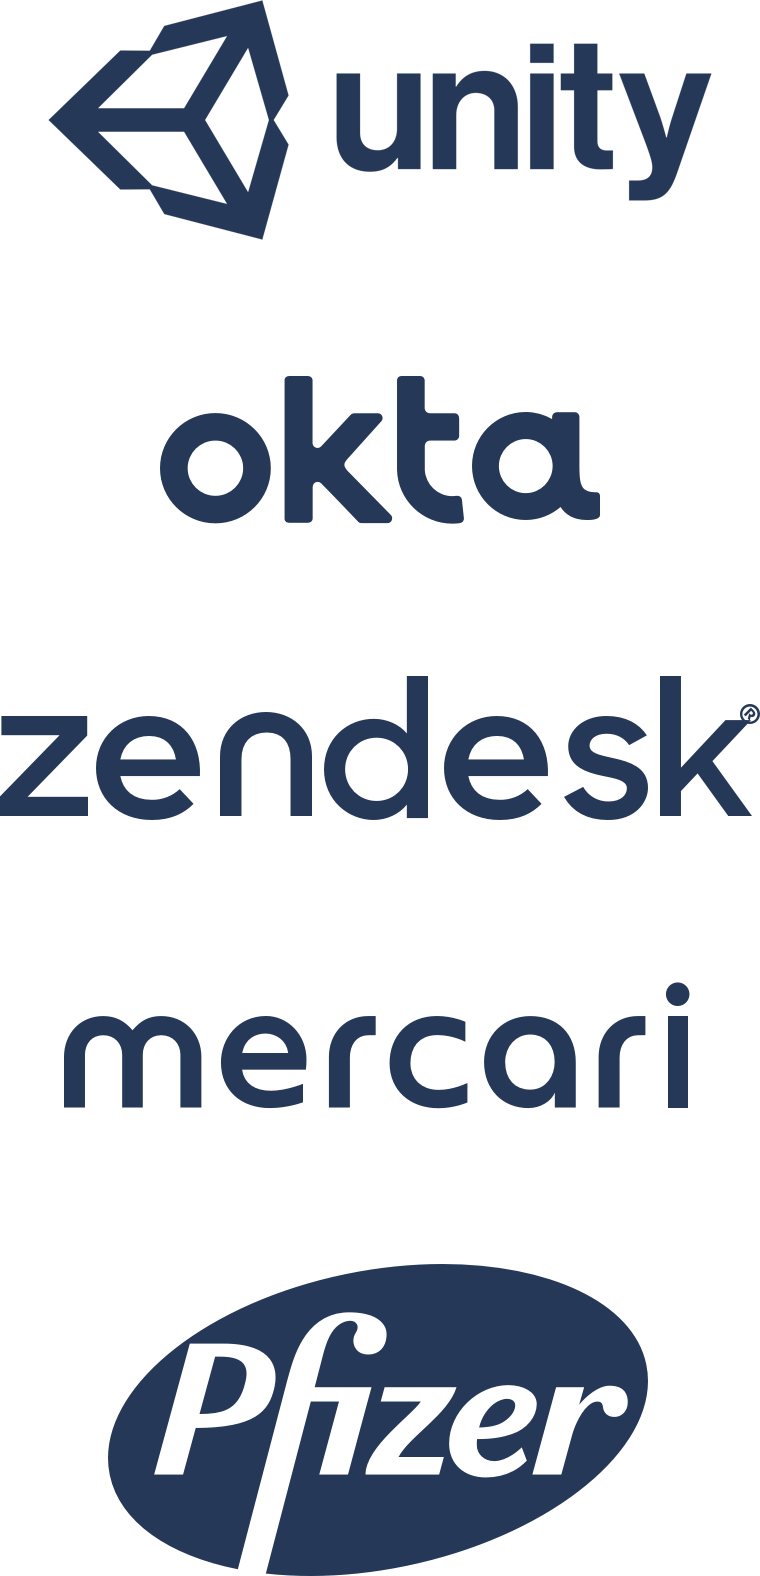 Unity, Okta, Zendesk, Mercari, Pfizer 로고